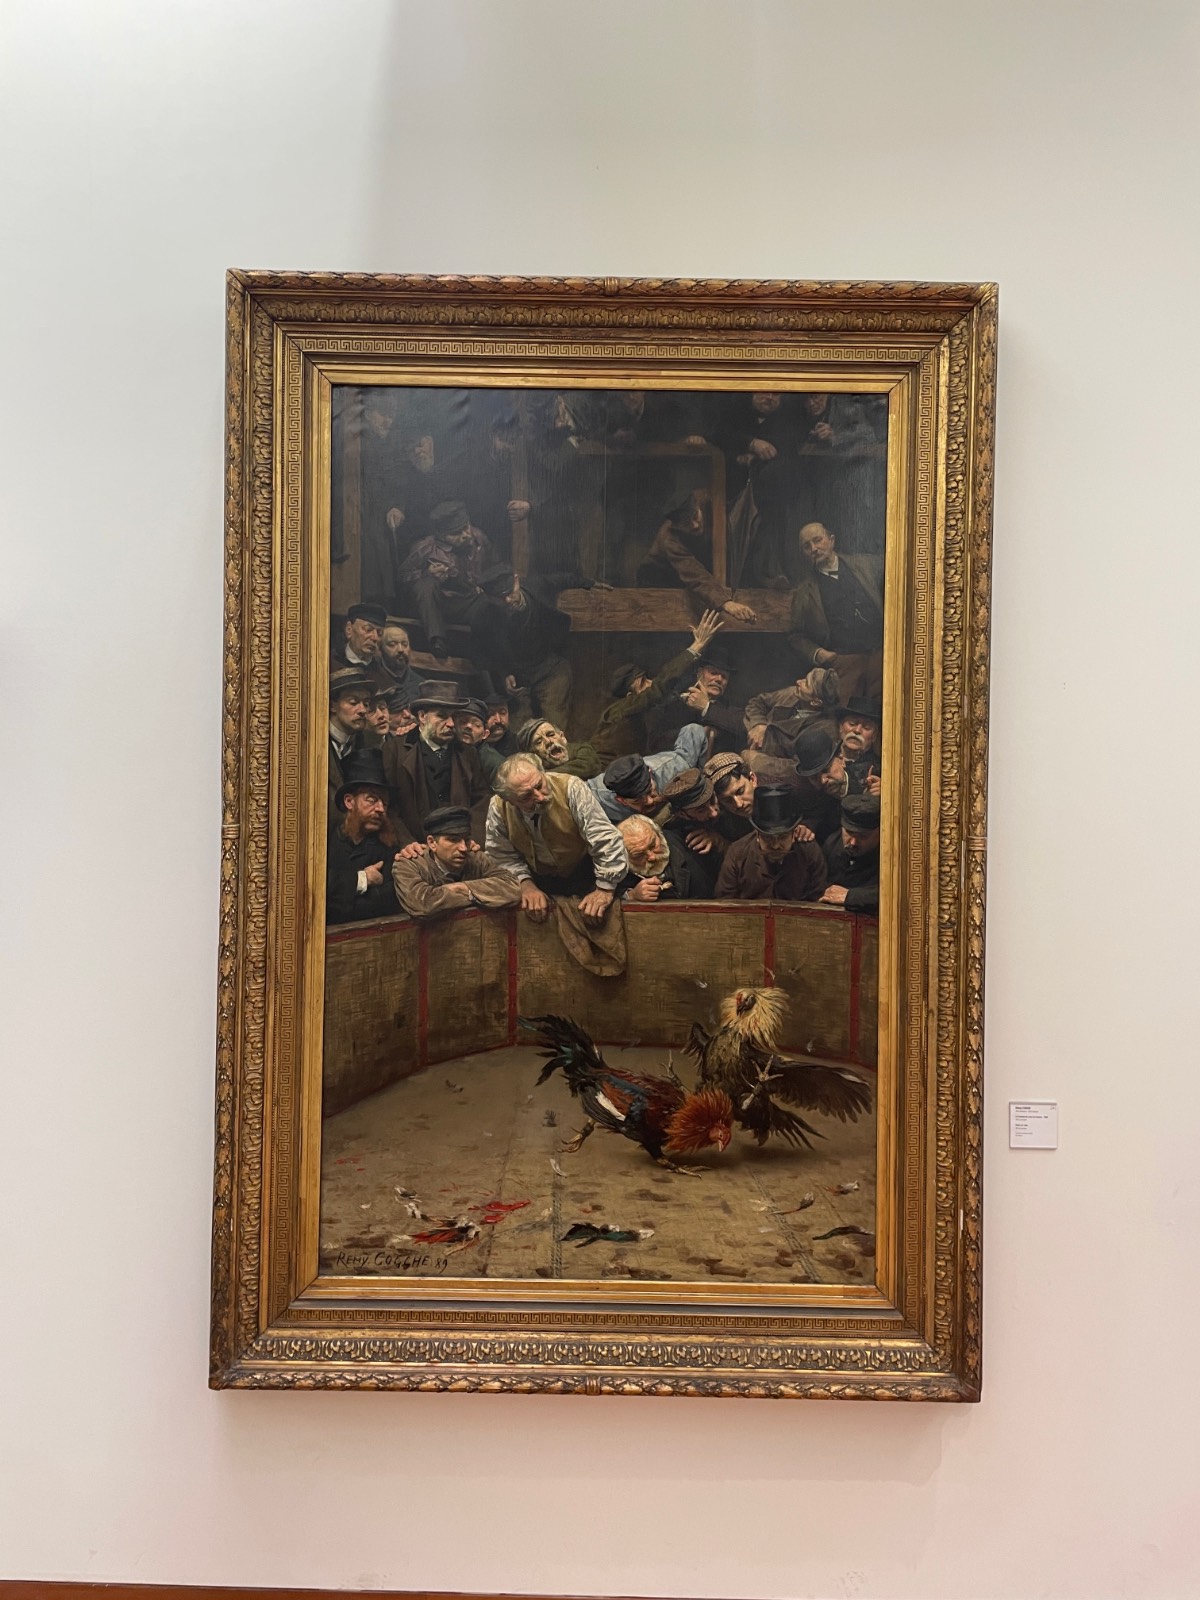 Rémy cogghe, Combat de coqs en flandre 1889<div>내 키보다 큰 이 그림. 어디선가 본 듯한 유명한 그림이다. 이 앞에서 한참을 관찰했다.<br></div>